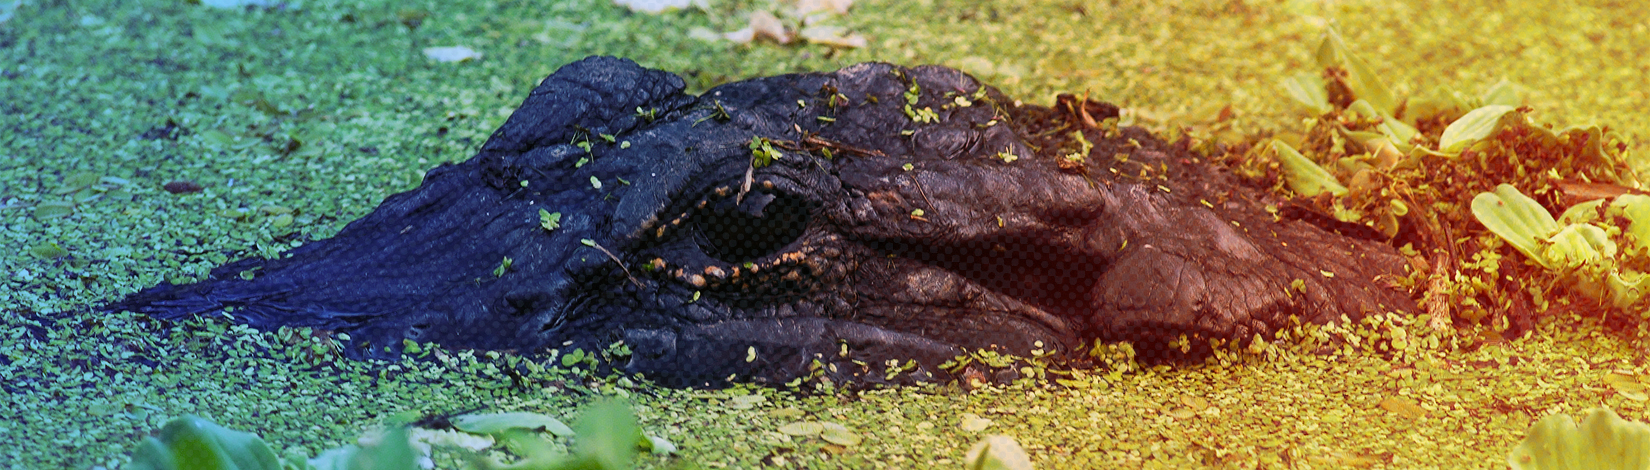 An alligator swiming in algae.